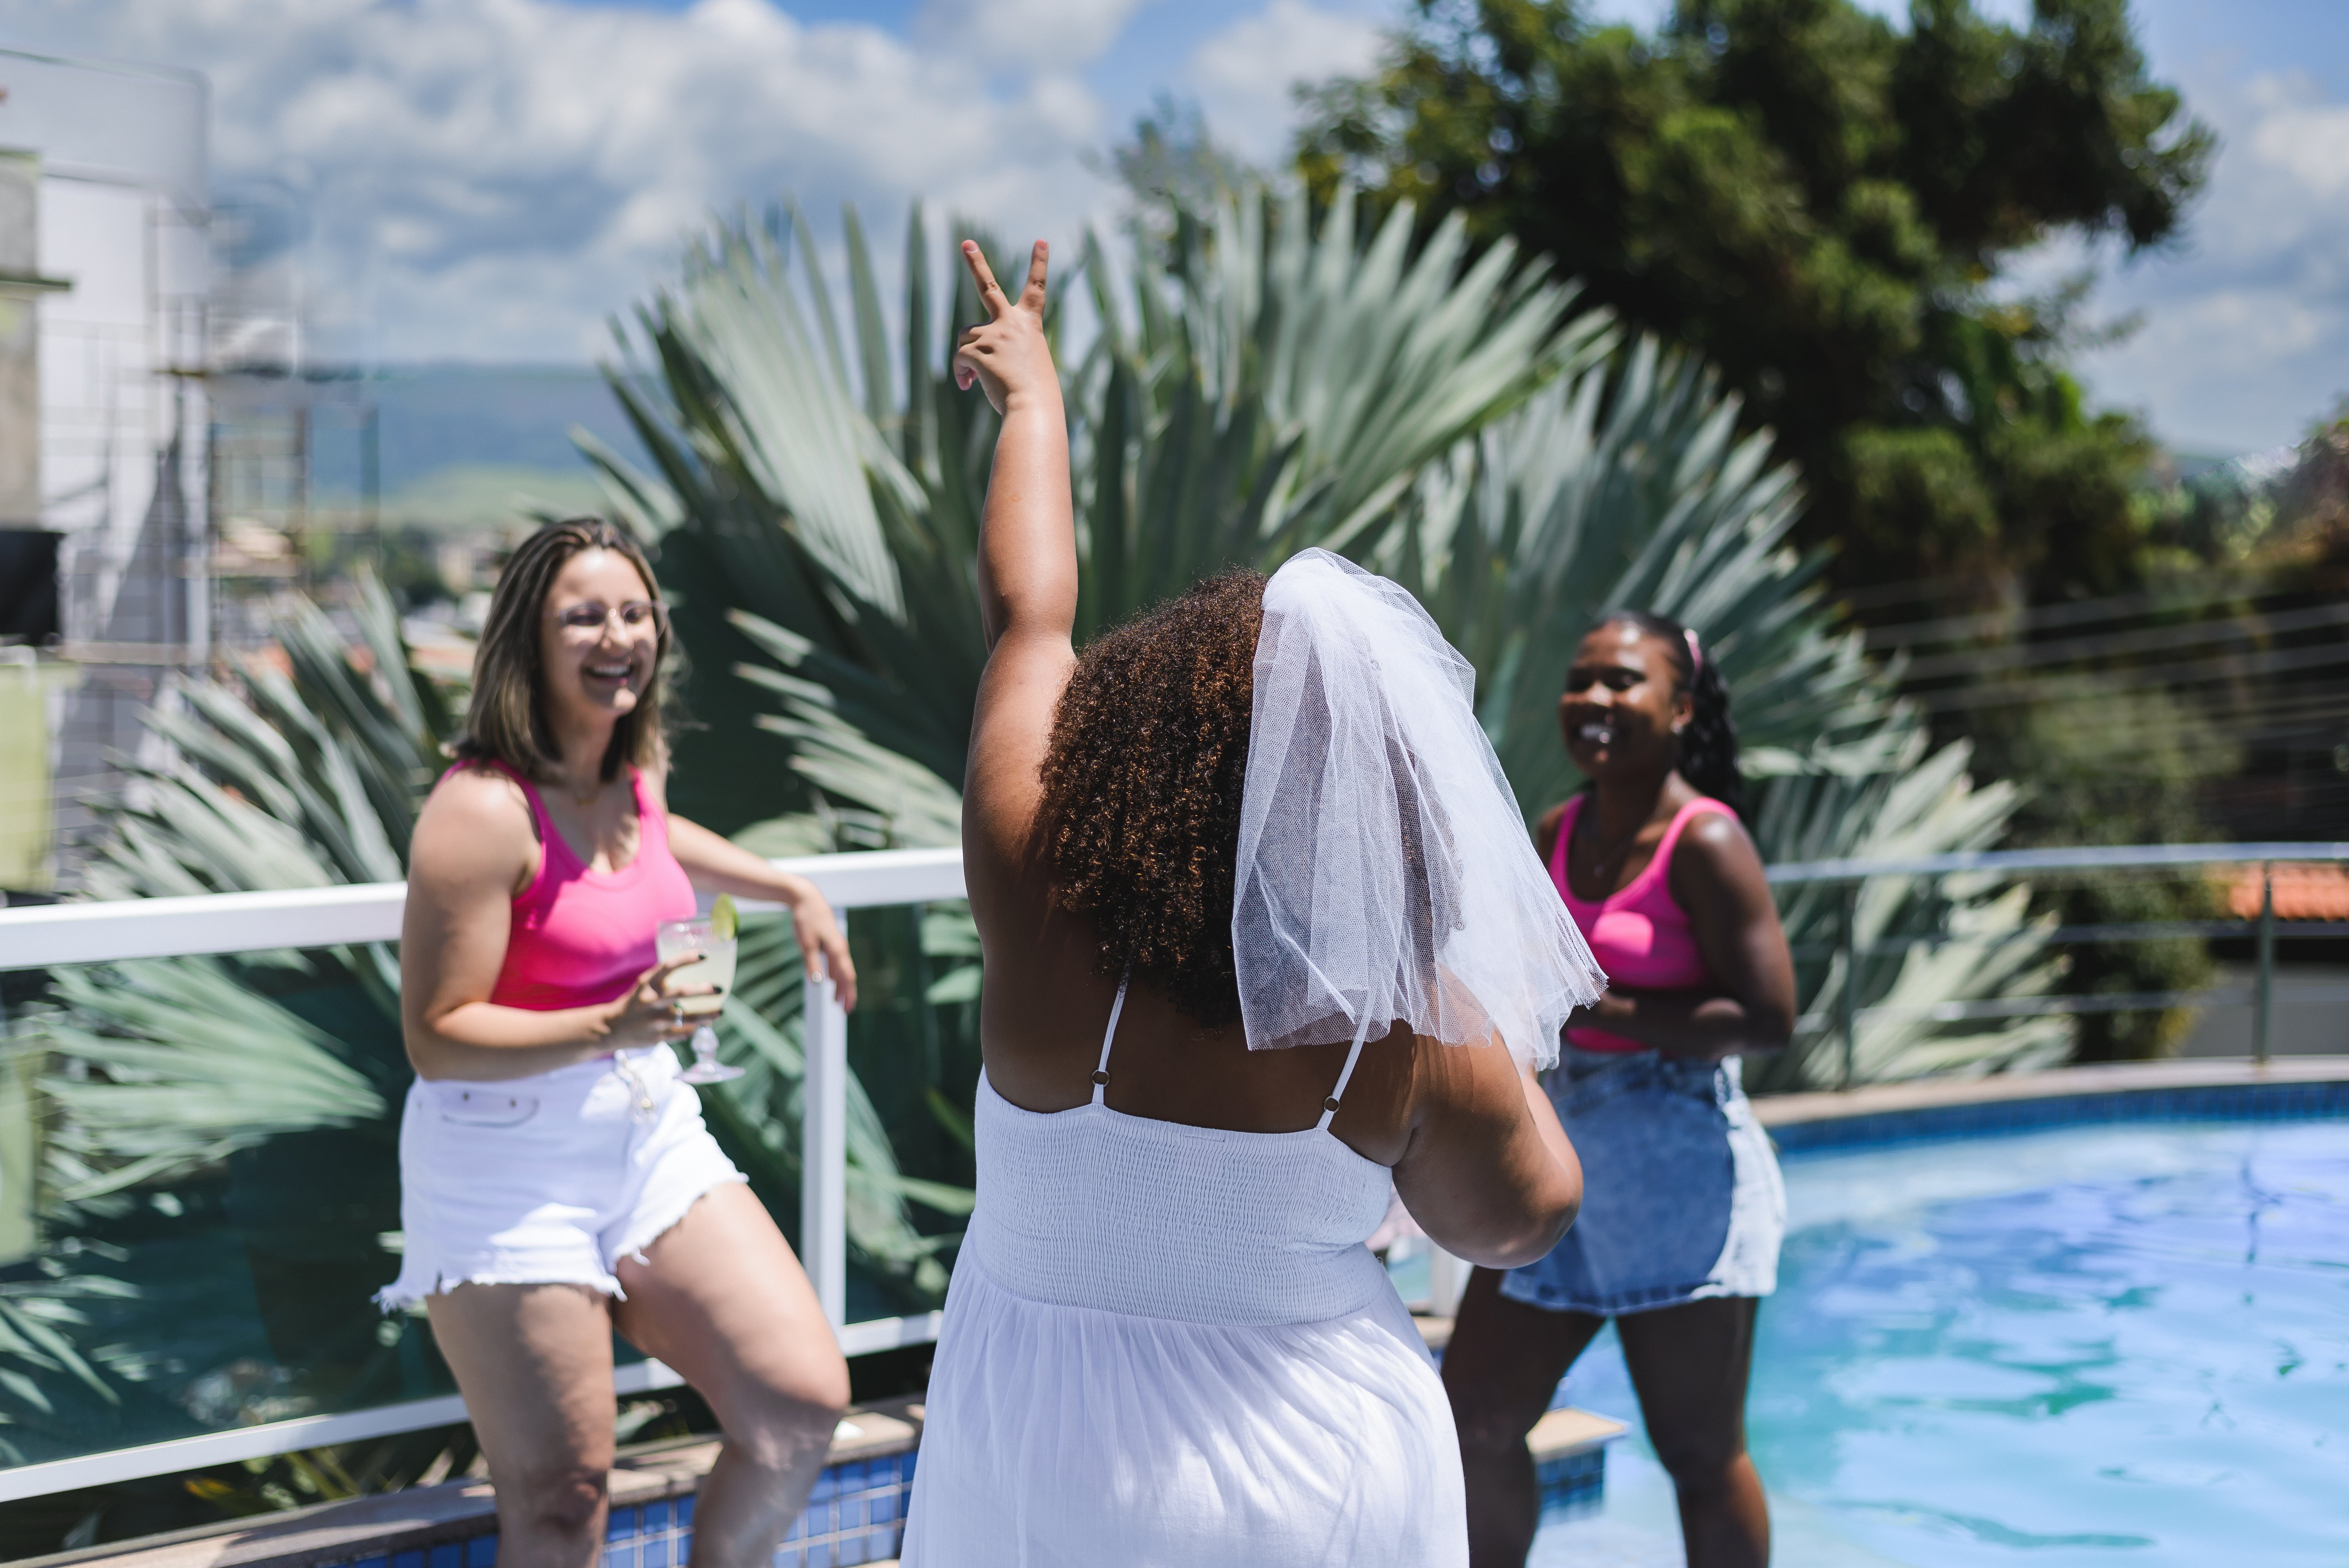 Bachelorette Party Gift Guide - Fun Ideas, Tip for Bride & Bridesmaids